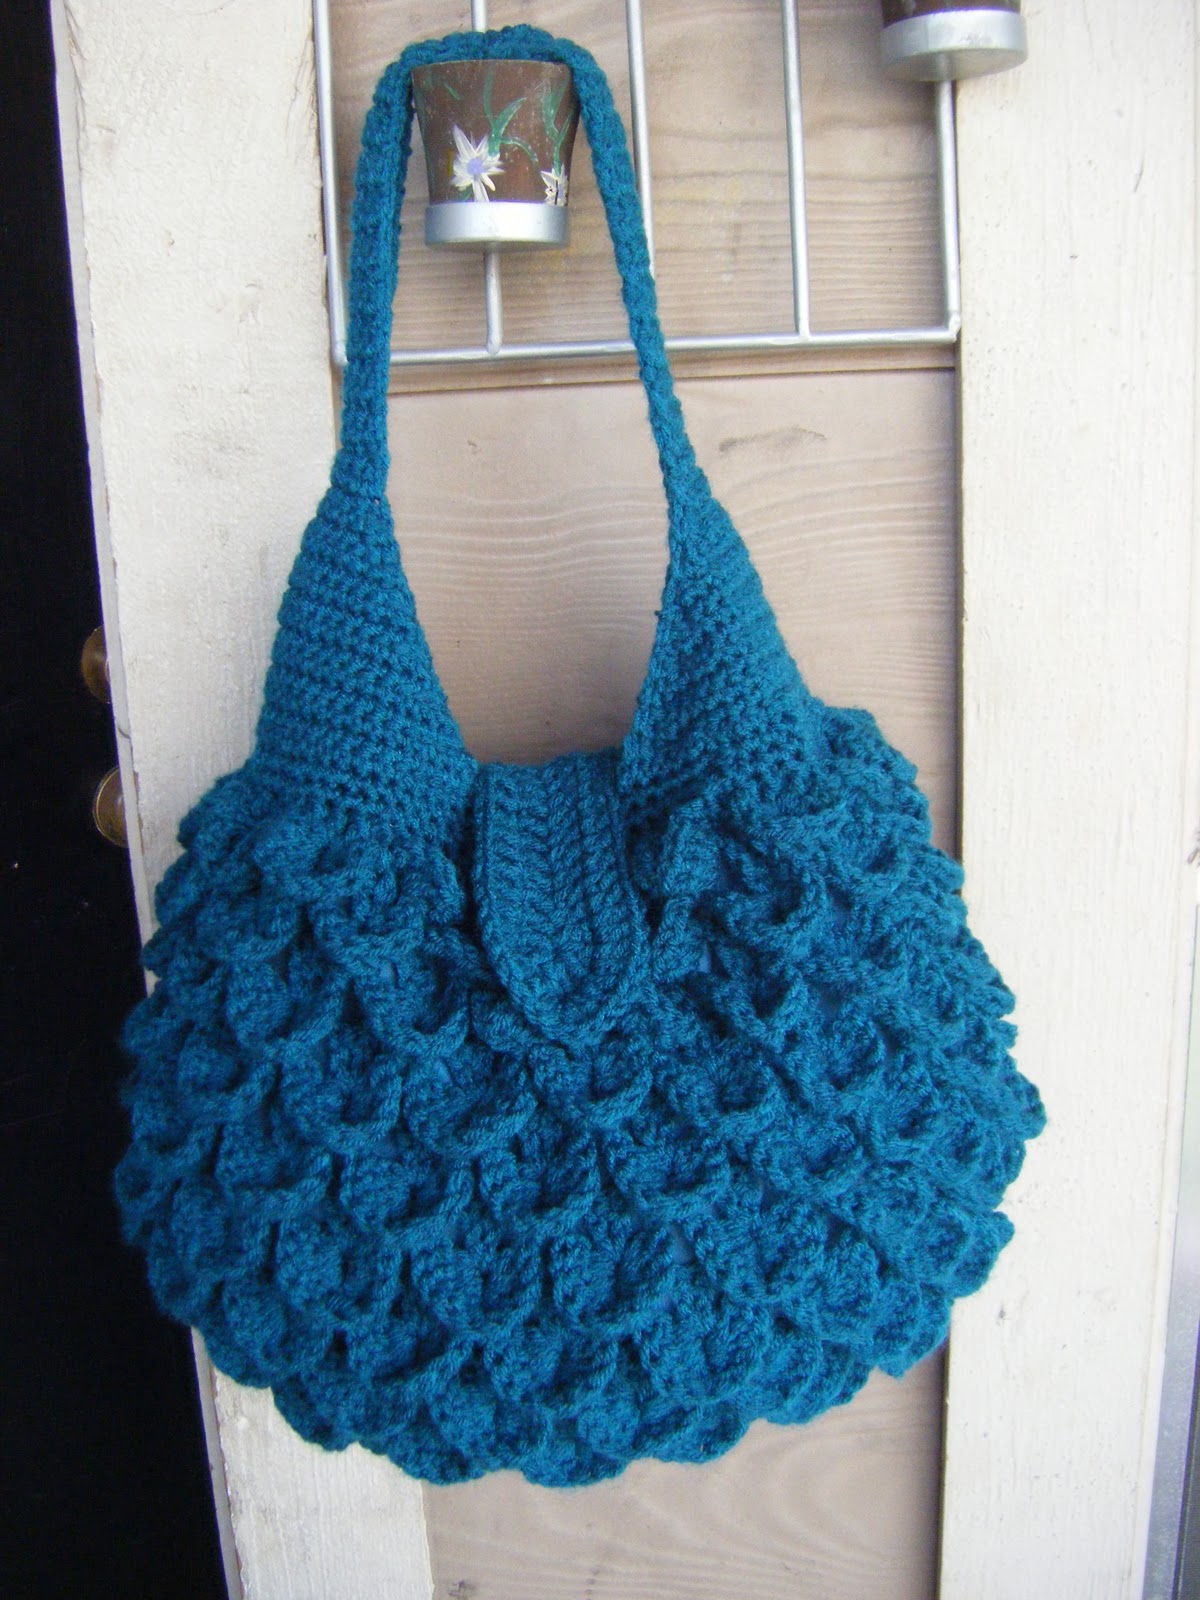 Free Crochet Bag Patterns - Crochet Handbags, Purses, and Totes